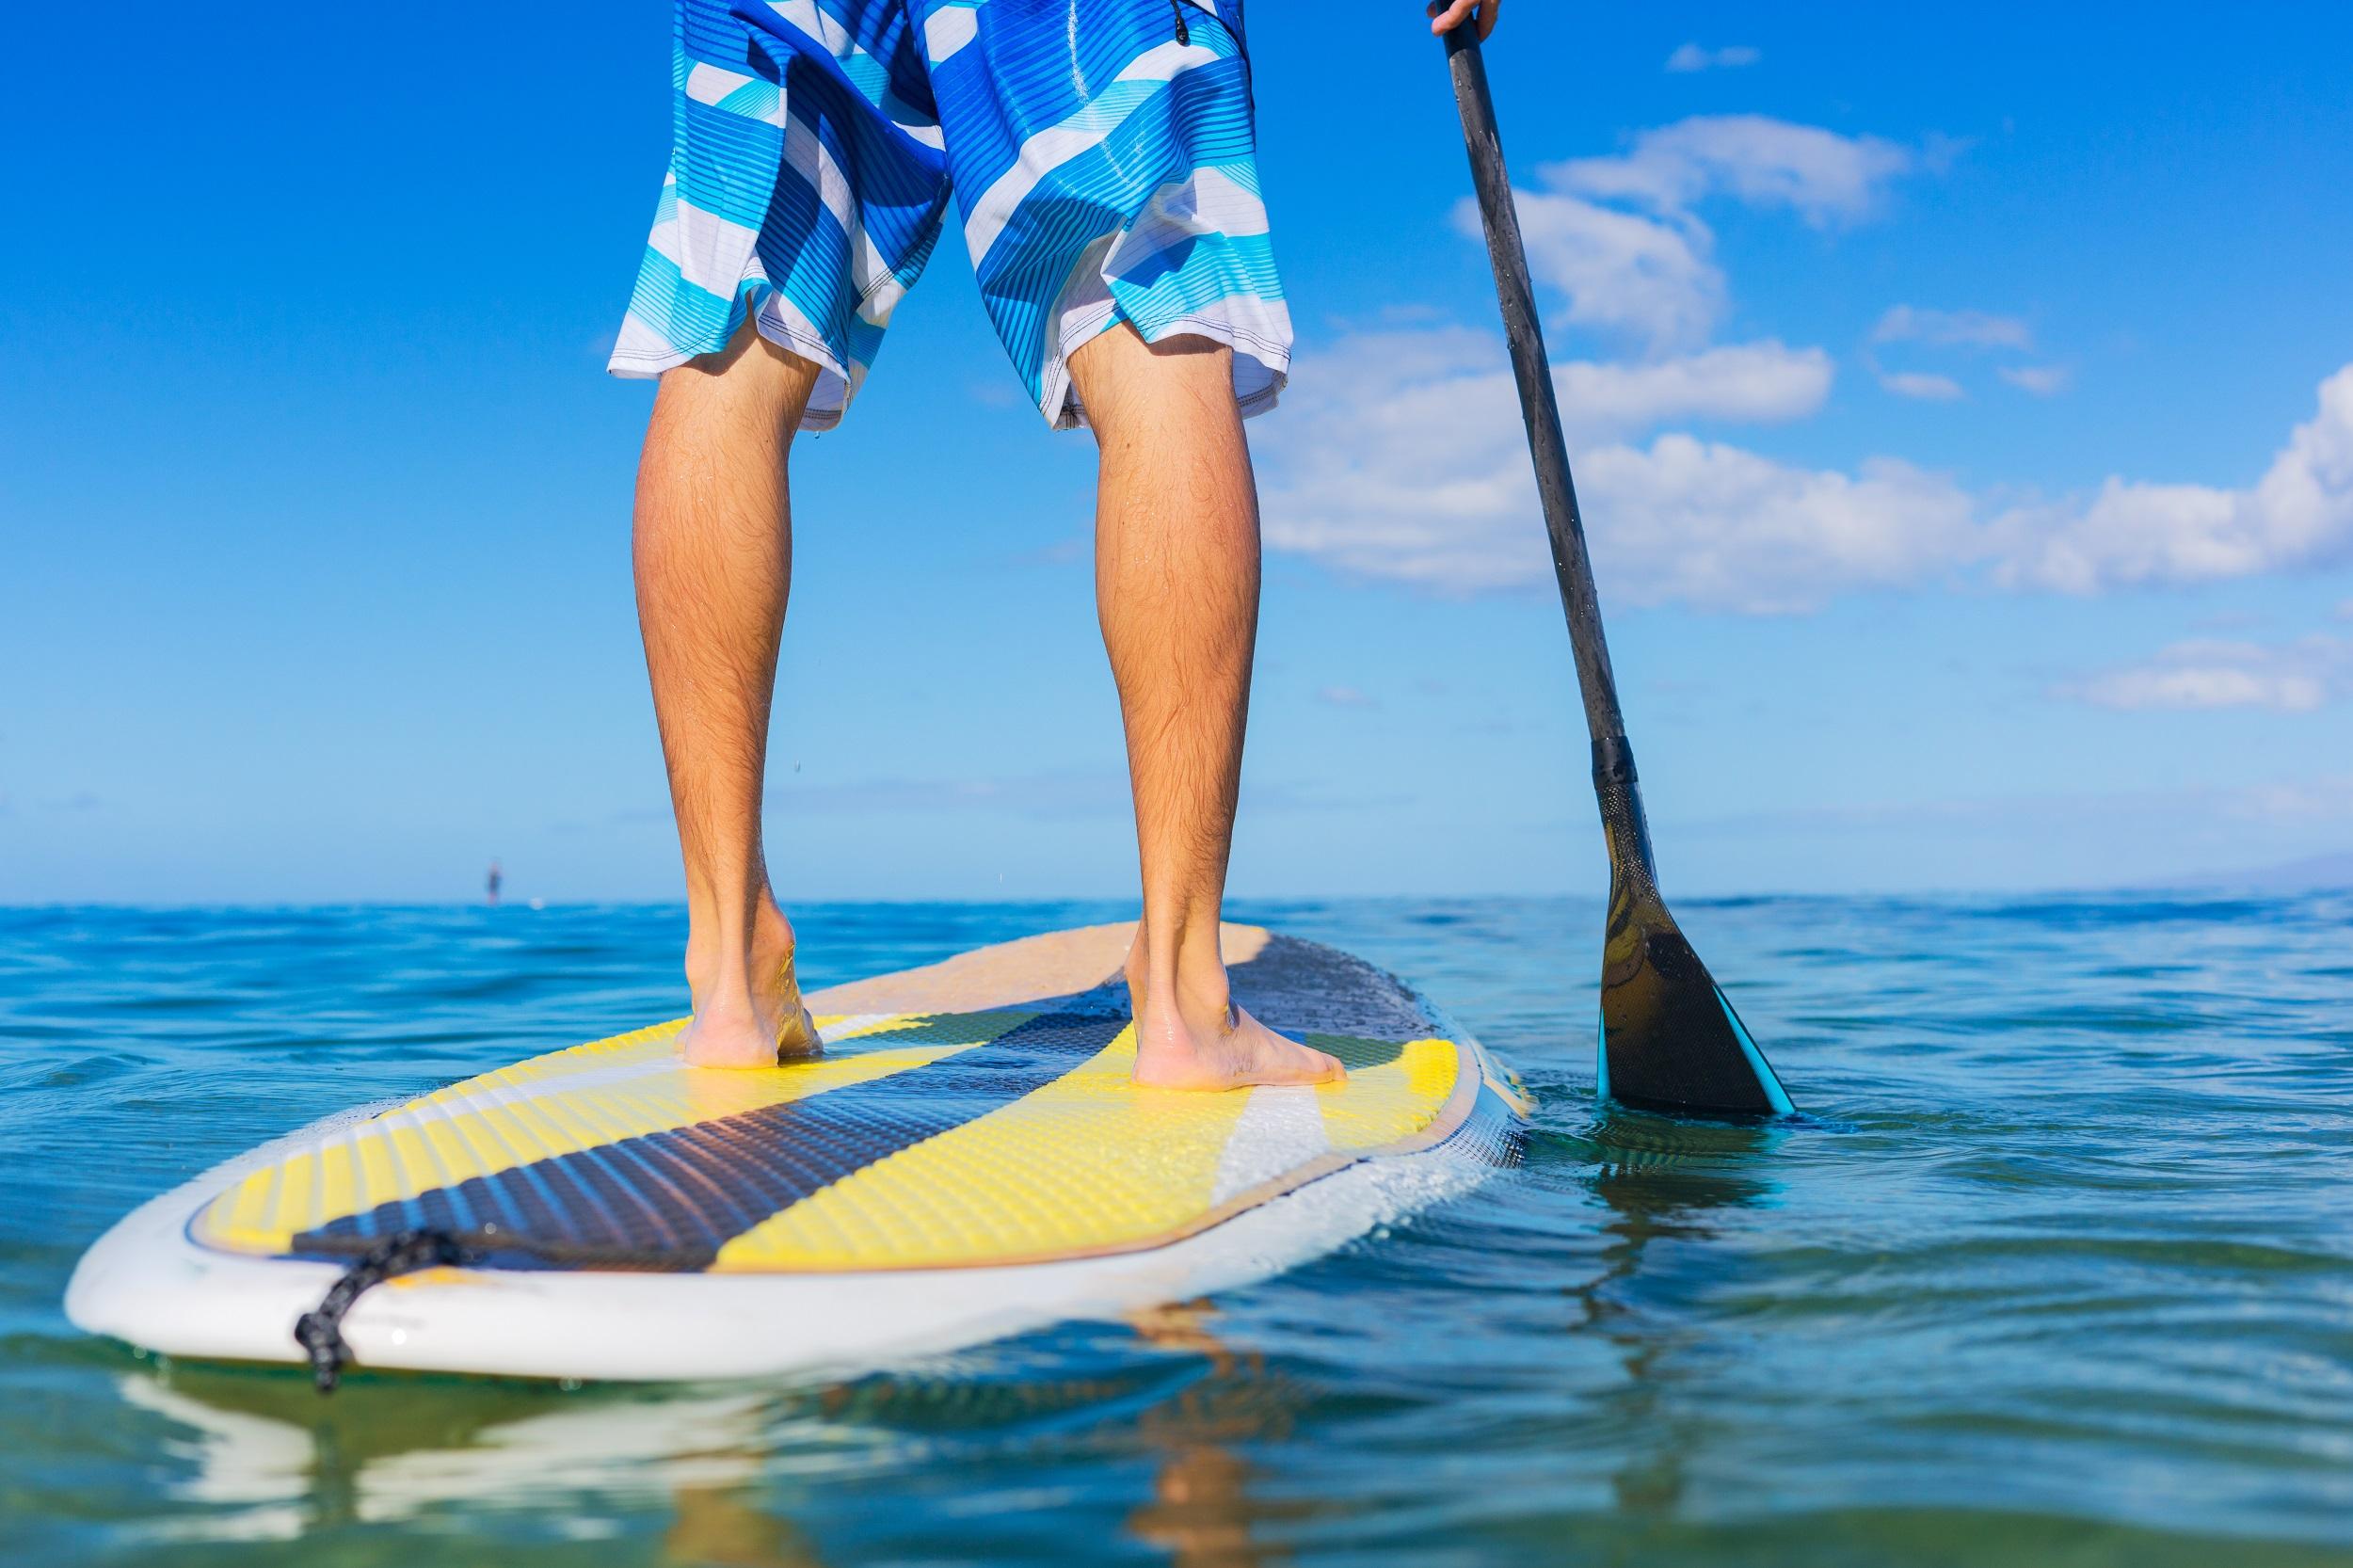 Mann auf Stand-Up Paddle Board am Strand